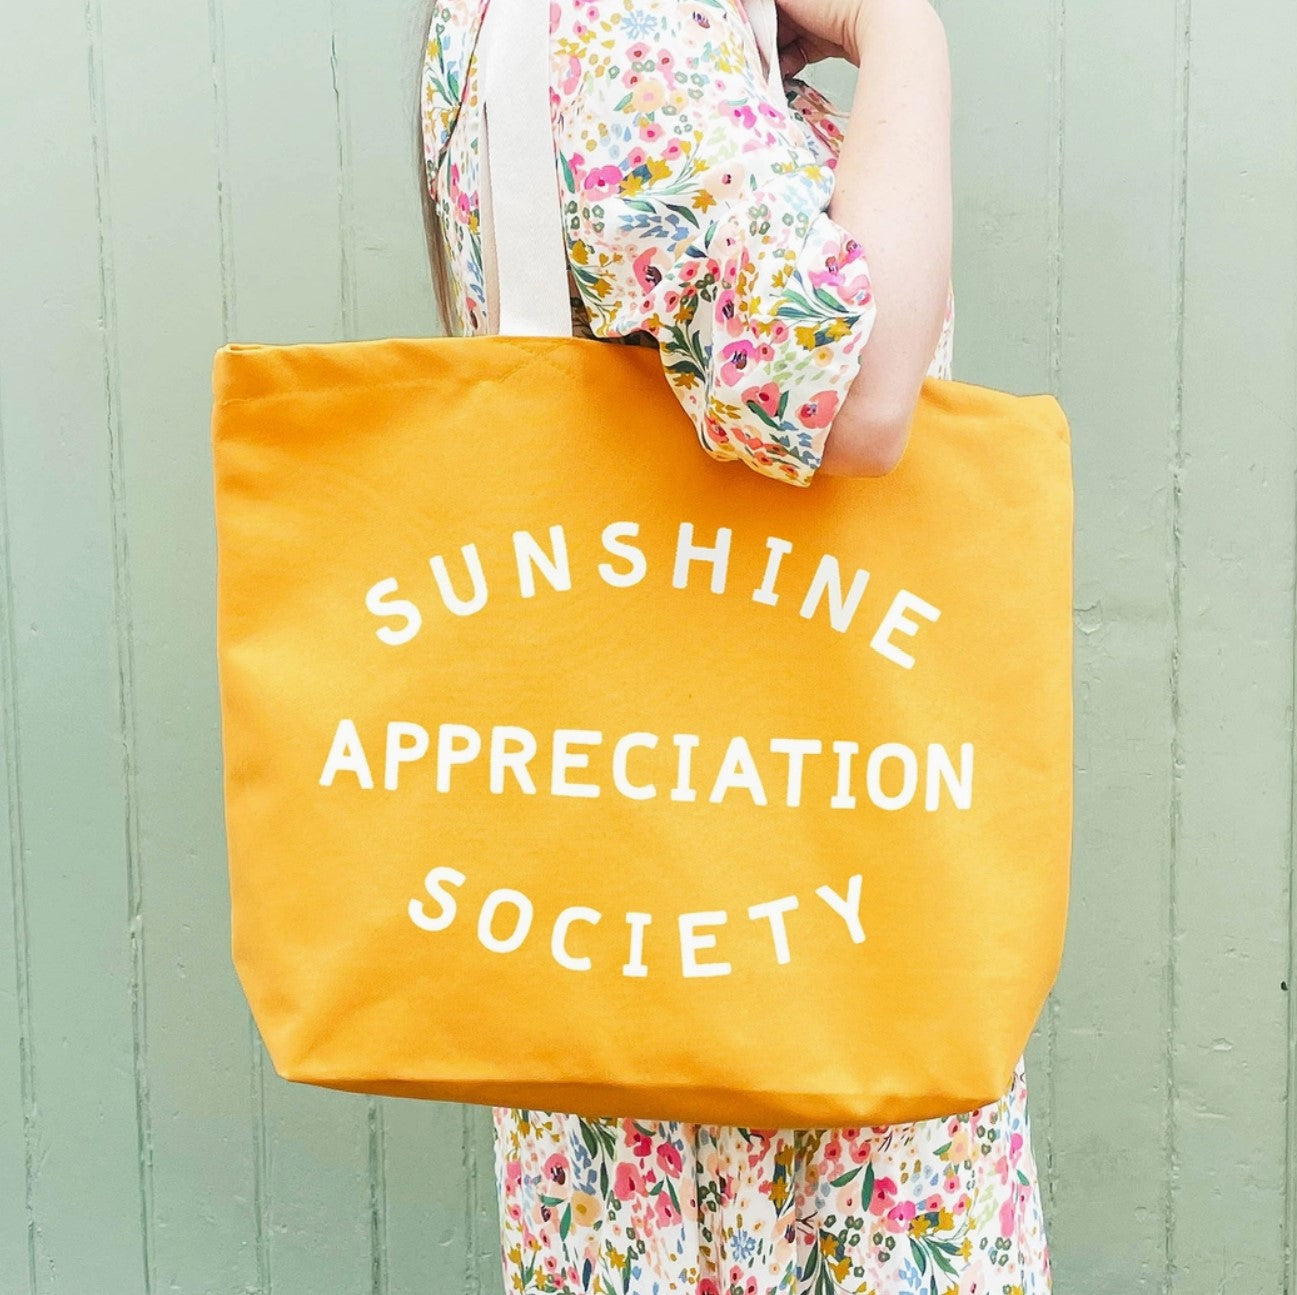 Sunshine Appreciation Society Tote Bag - Yellow - THE BRISTOL ARTISAN